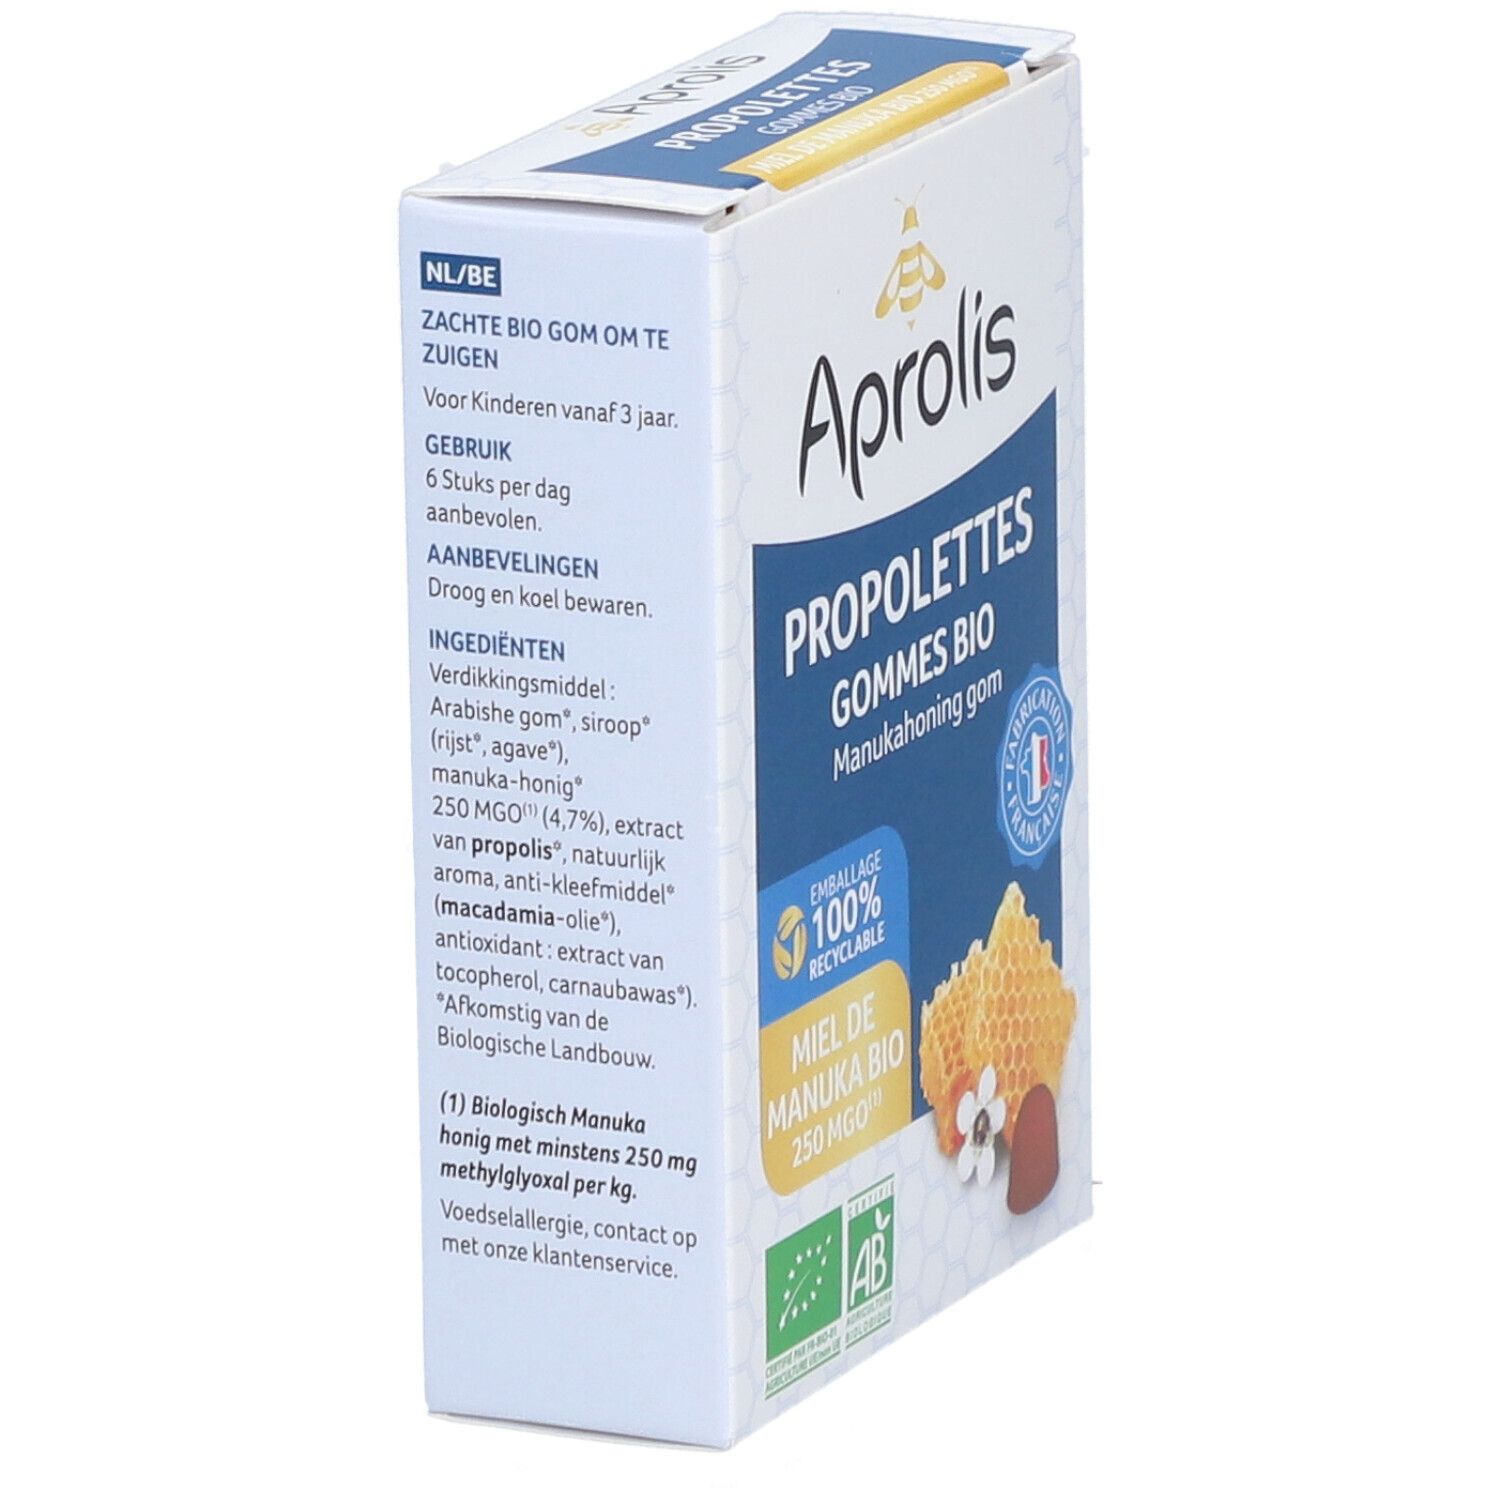 Be-Life Aprolis® Propolettes Manuka Bio